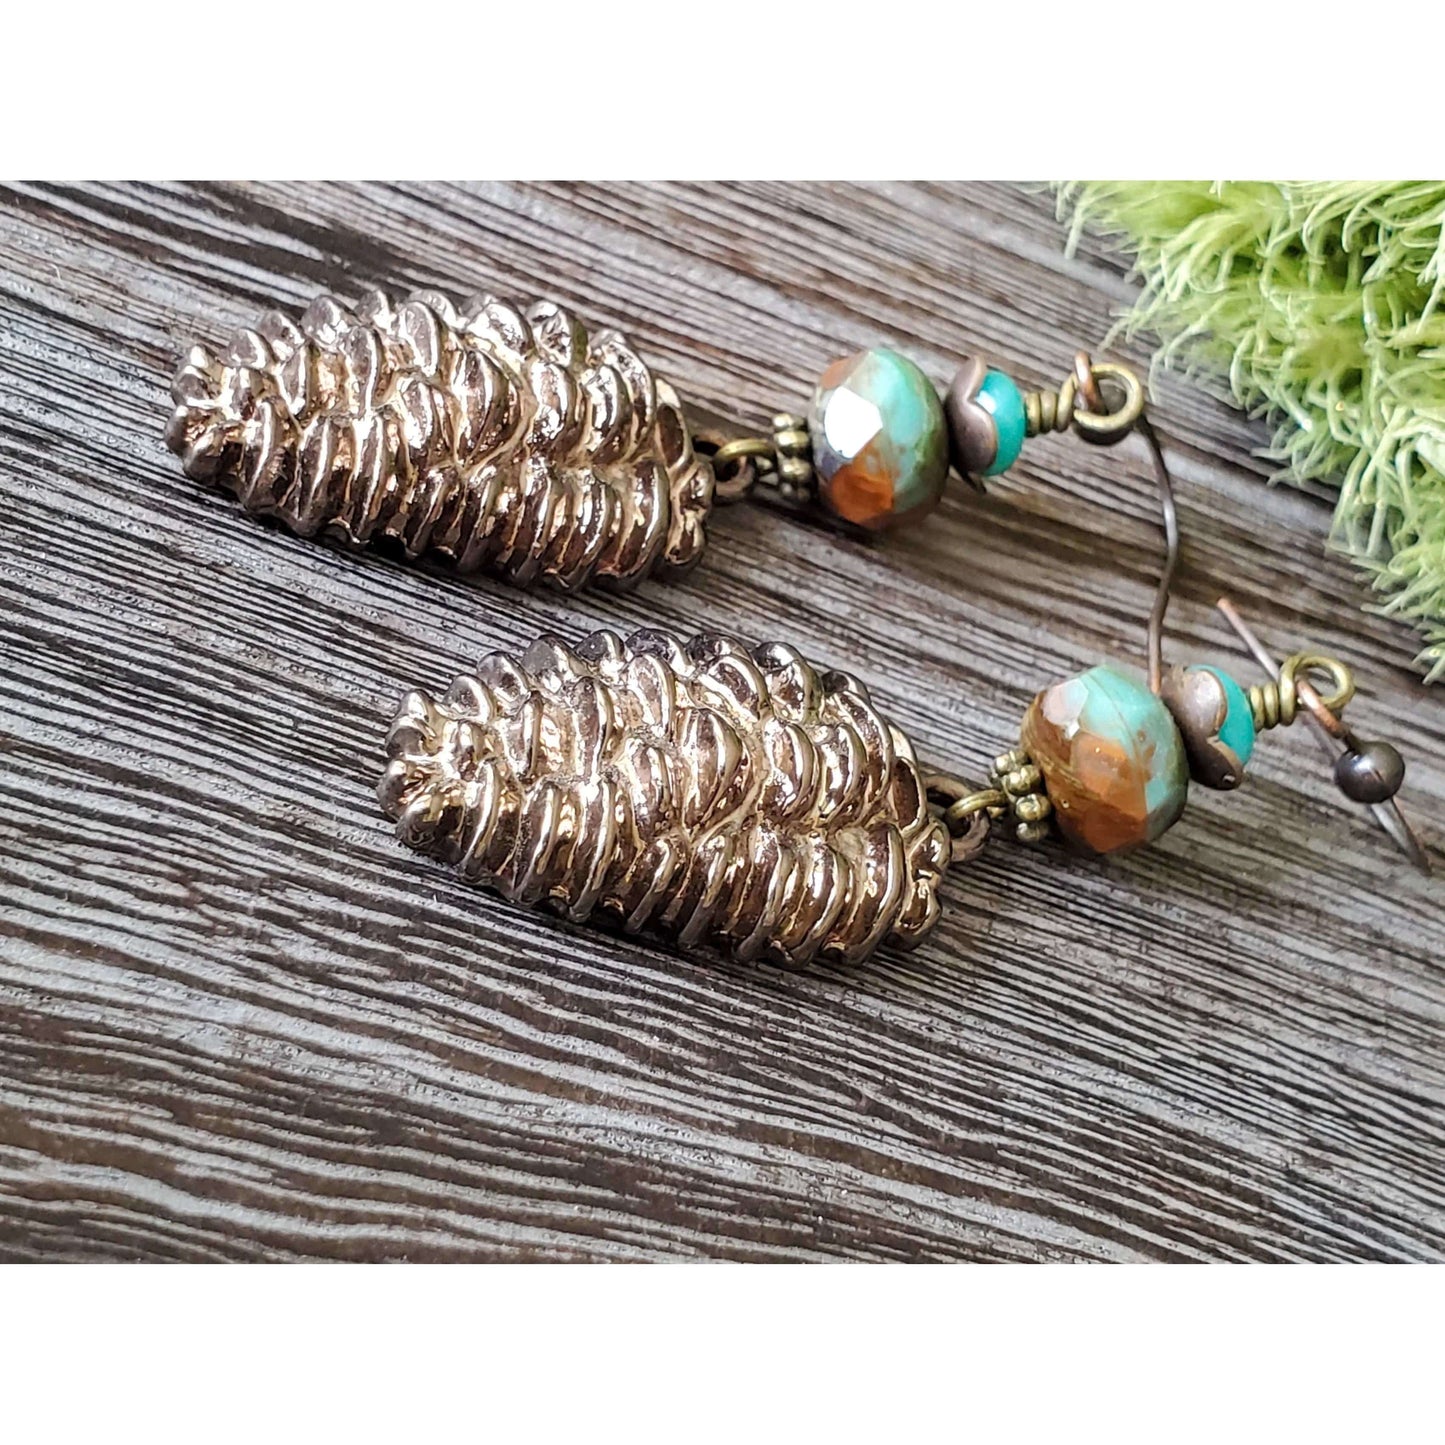 Czech Bead and Pinecone Charm Earrings - Nicki Lynn Jewelry